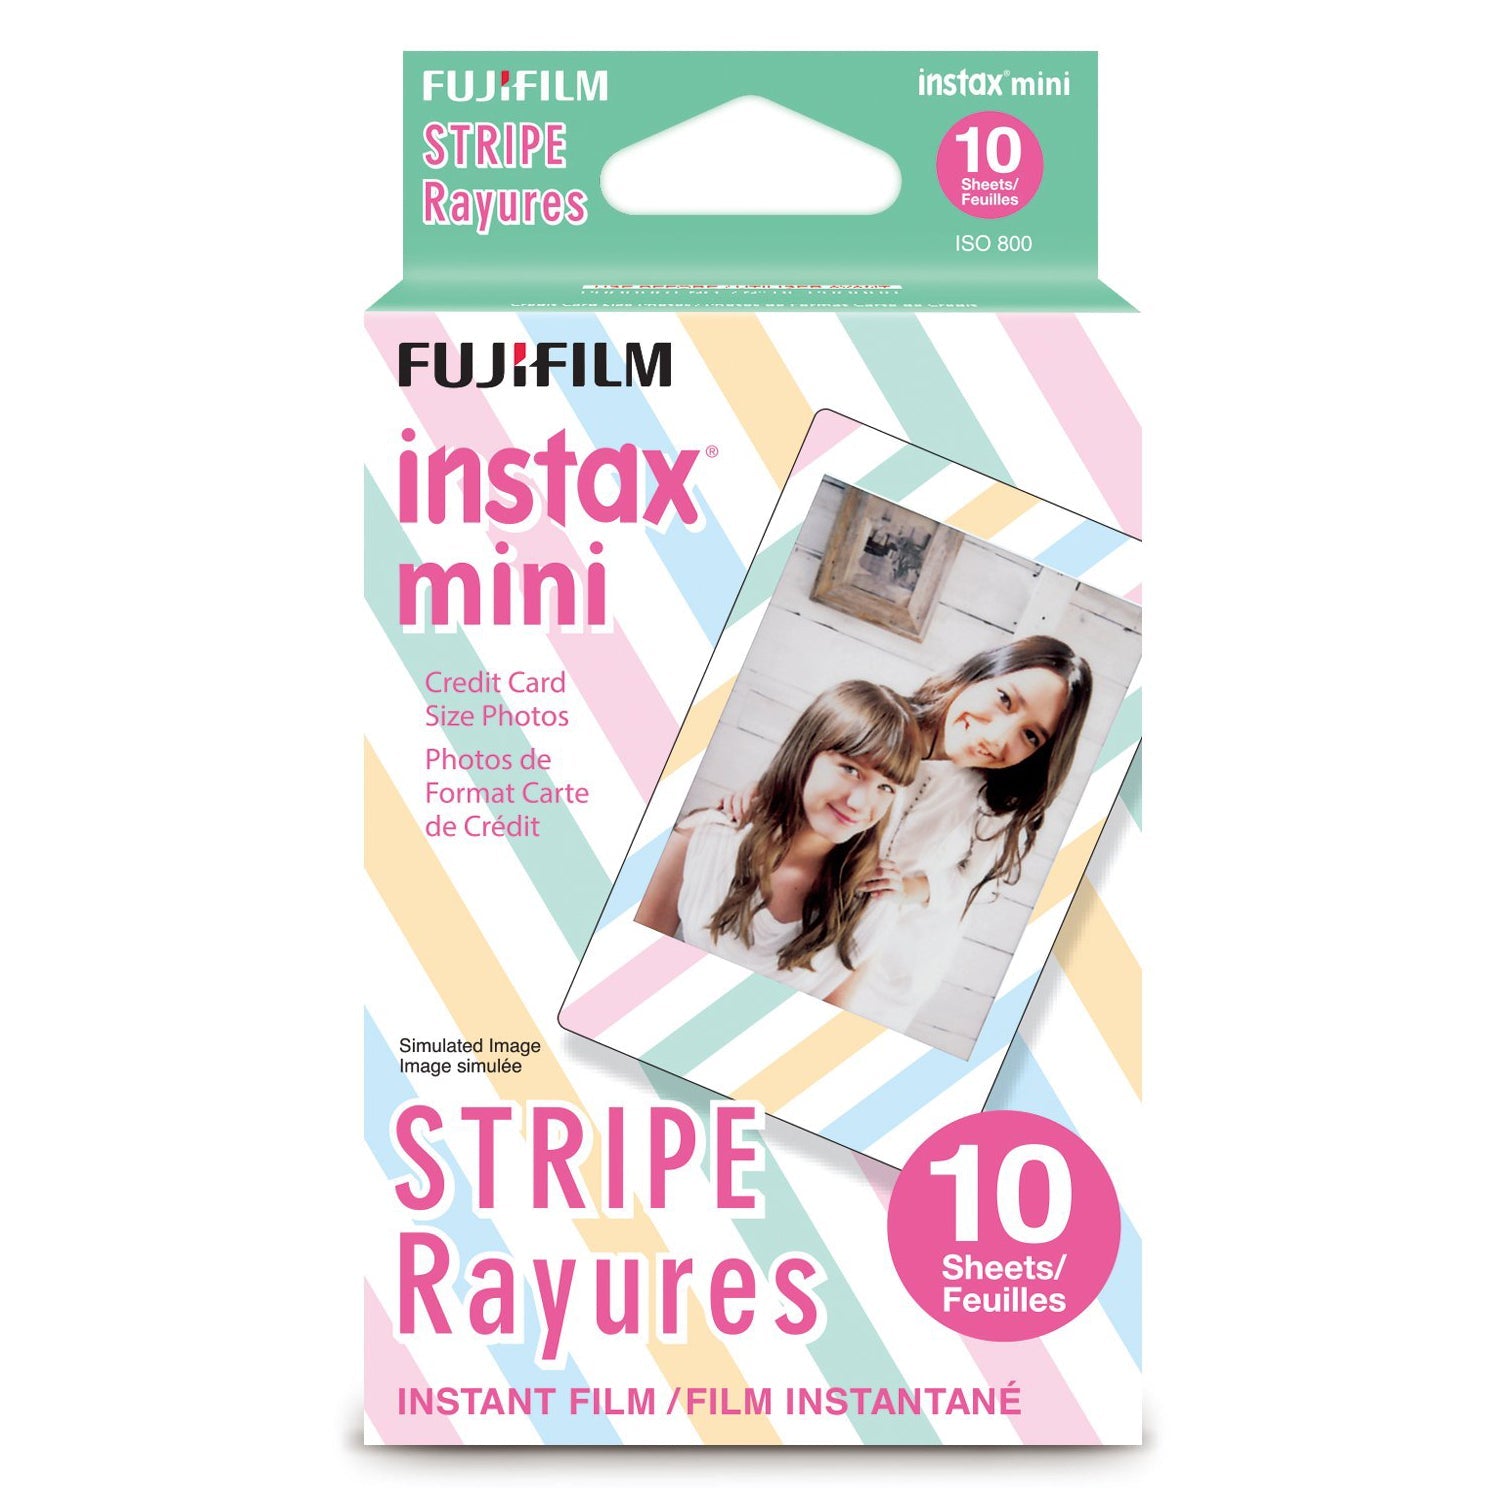 Fujifilm Instax Mini 10X1 stripe   Instant Film With 128-sheet Album for mini film (FLAMINGO PINK)